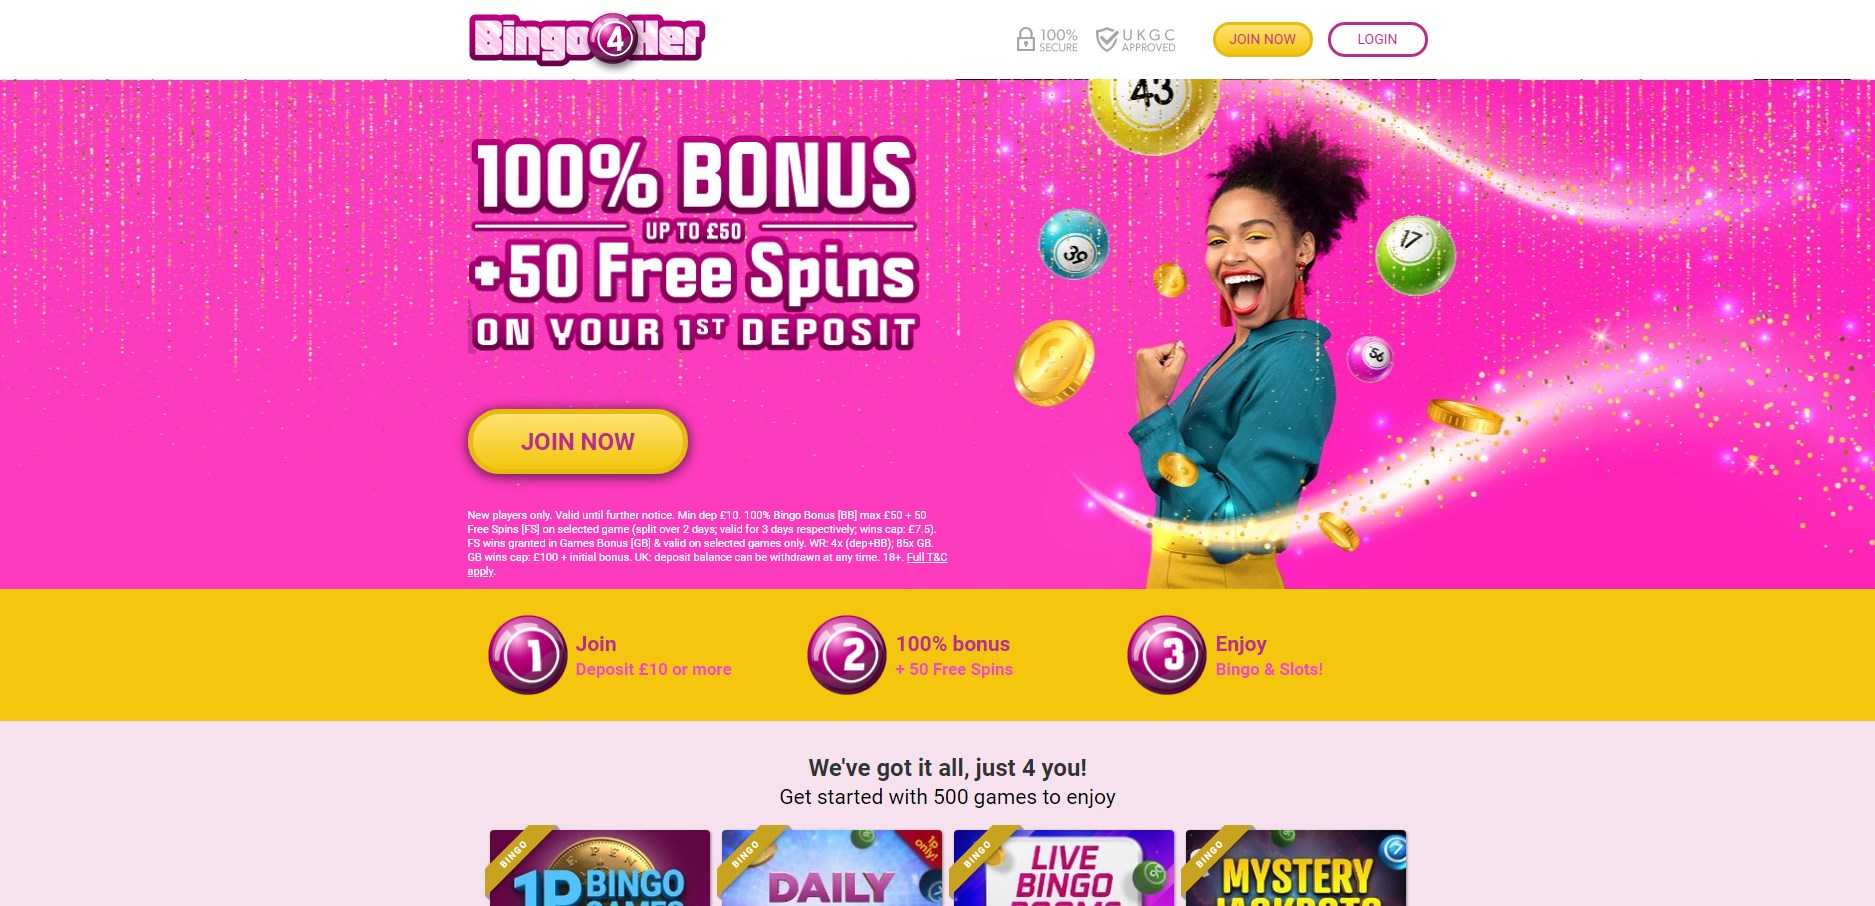 Bingo 4 Her Casino Review